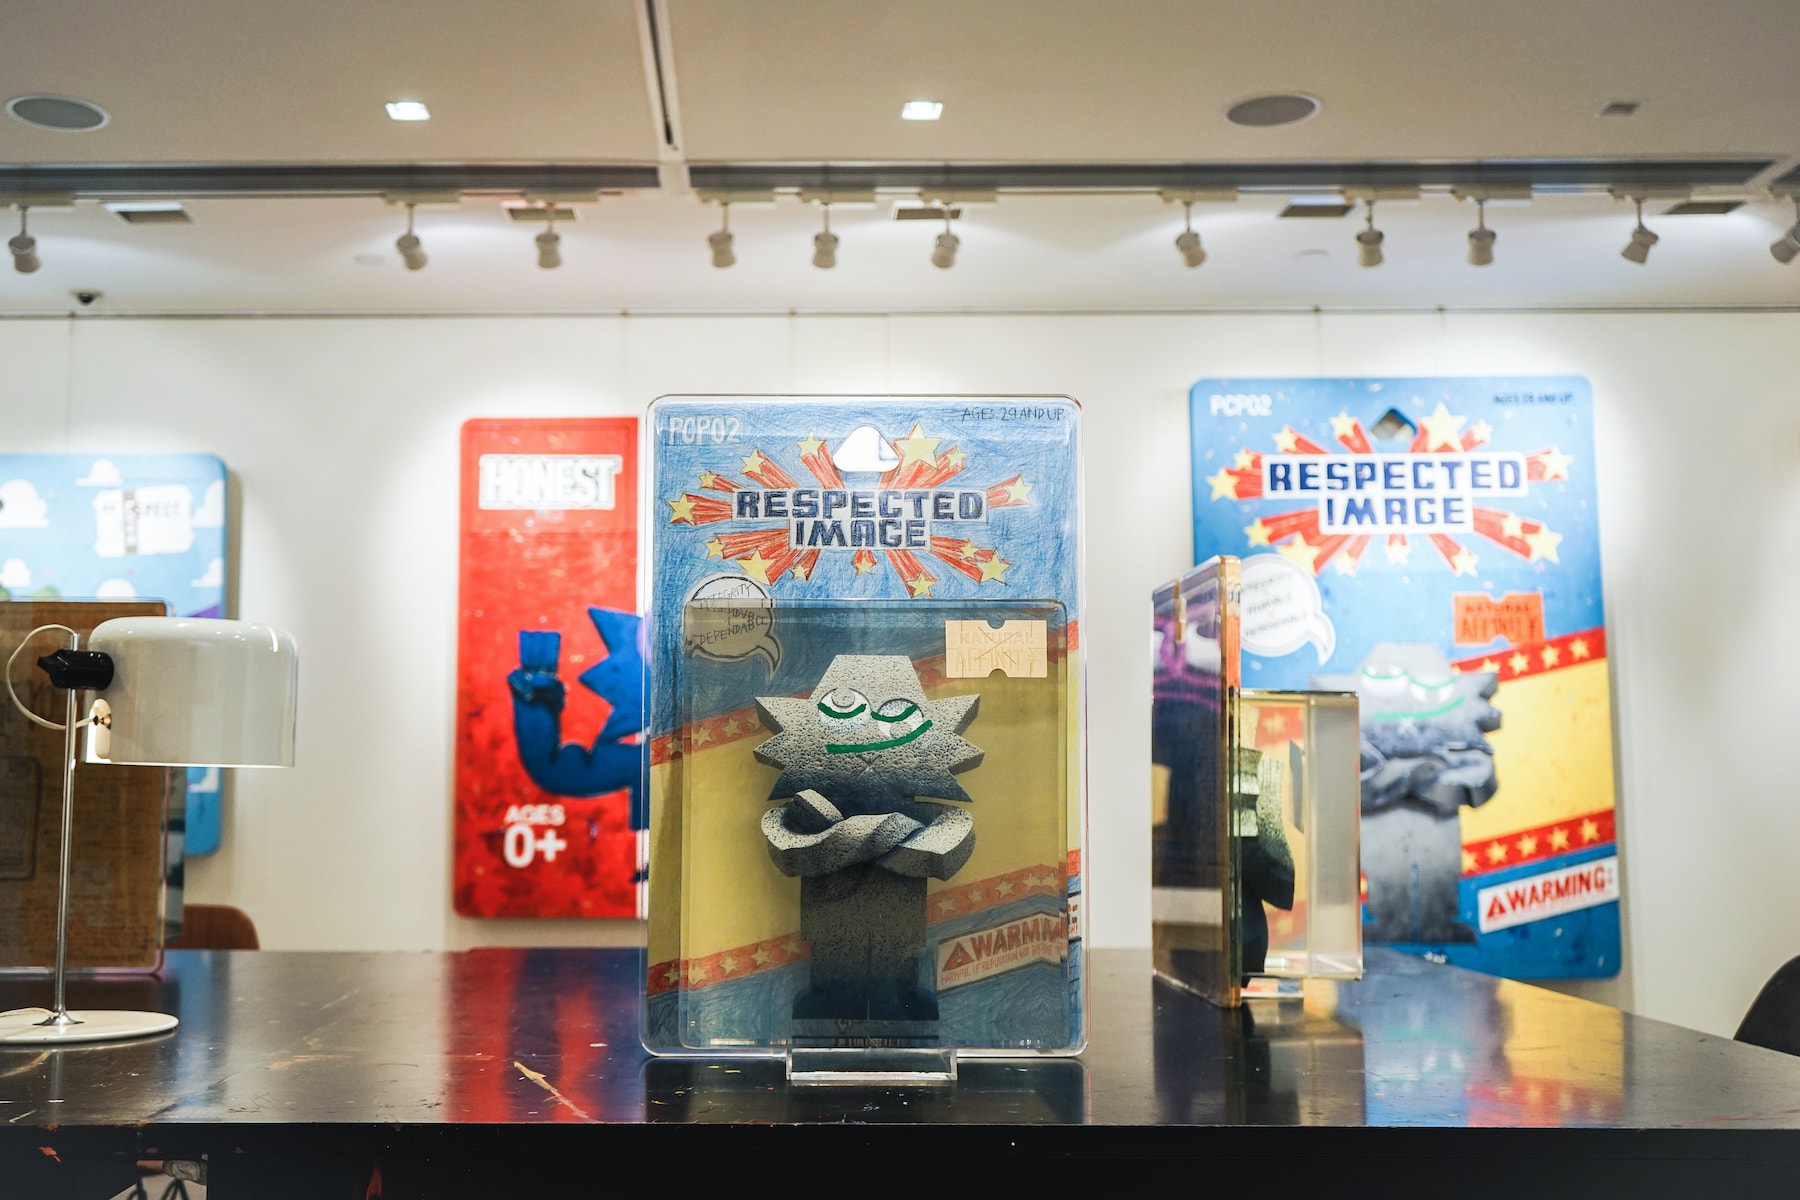 Christie's x Michael Lau Exhibition 6「COLLECT THEM ALL !」個人展覽